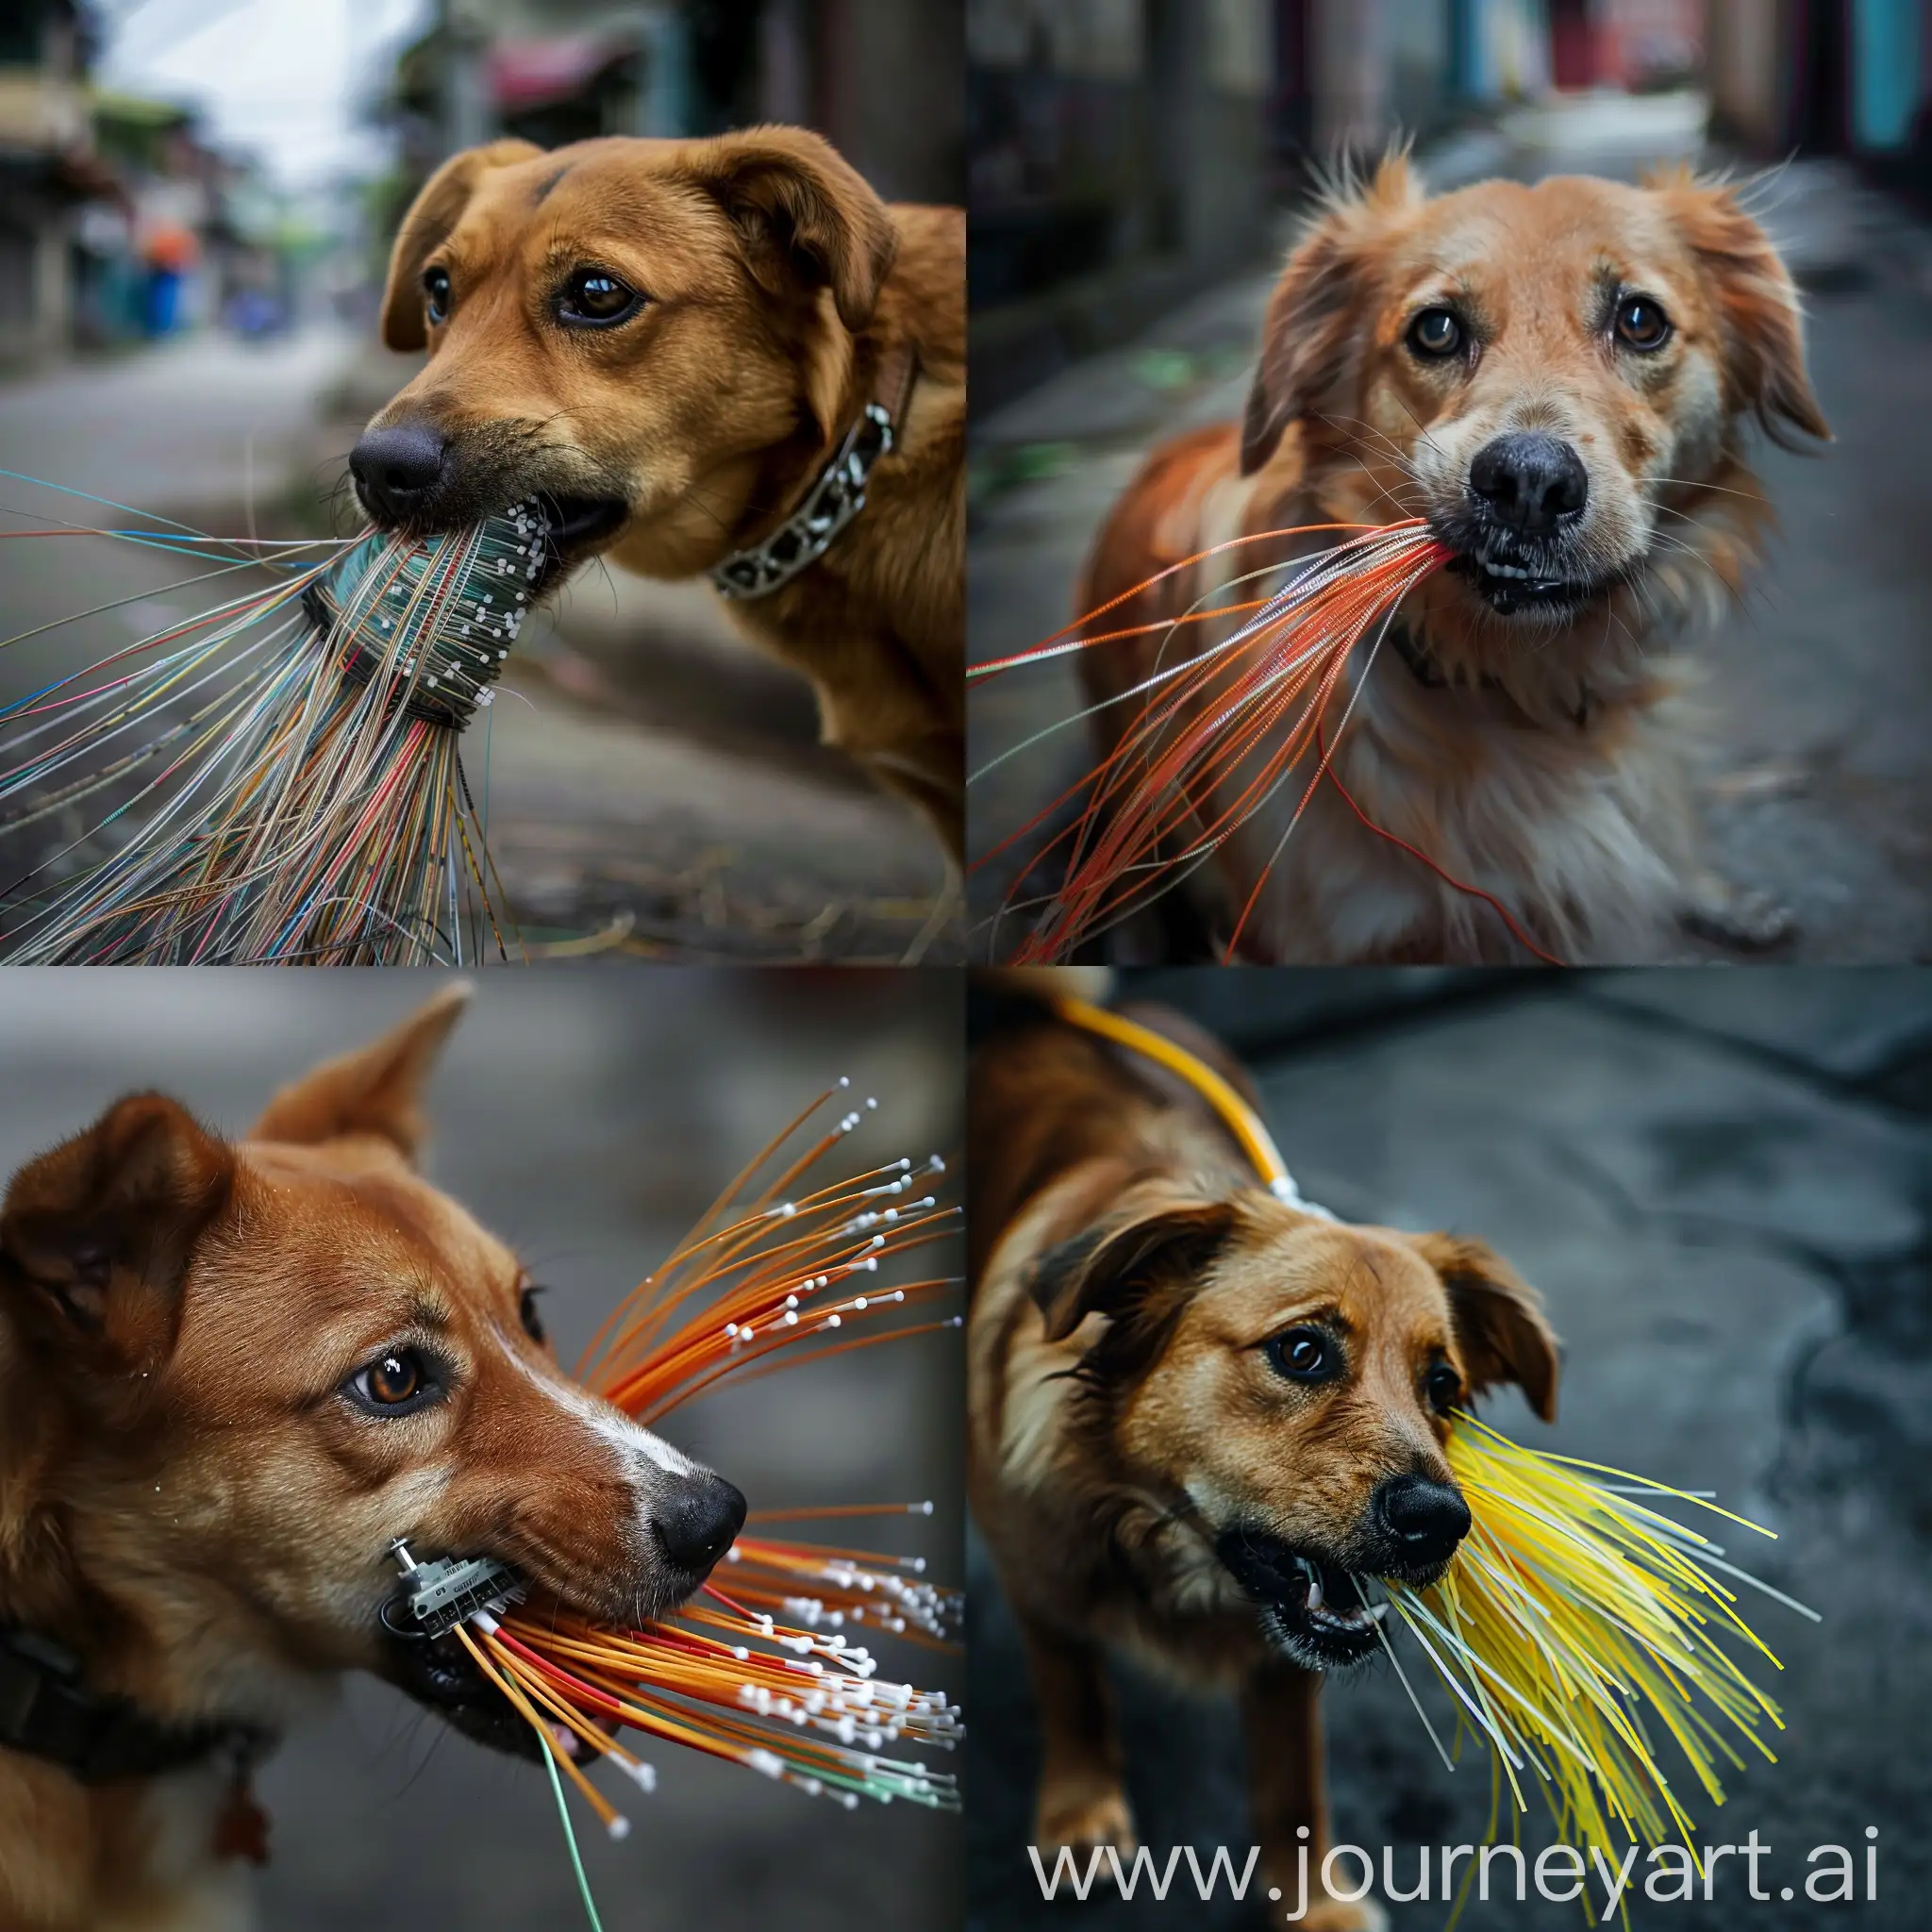 Dog-Eating-Optical-Fiber-Wire-in-Urban-Street-Scene